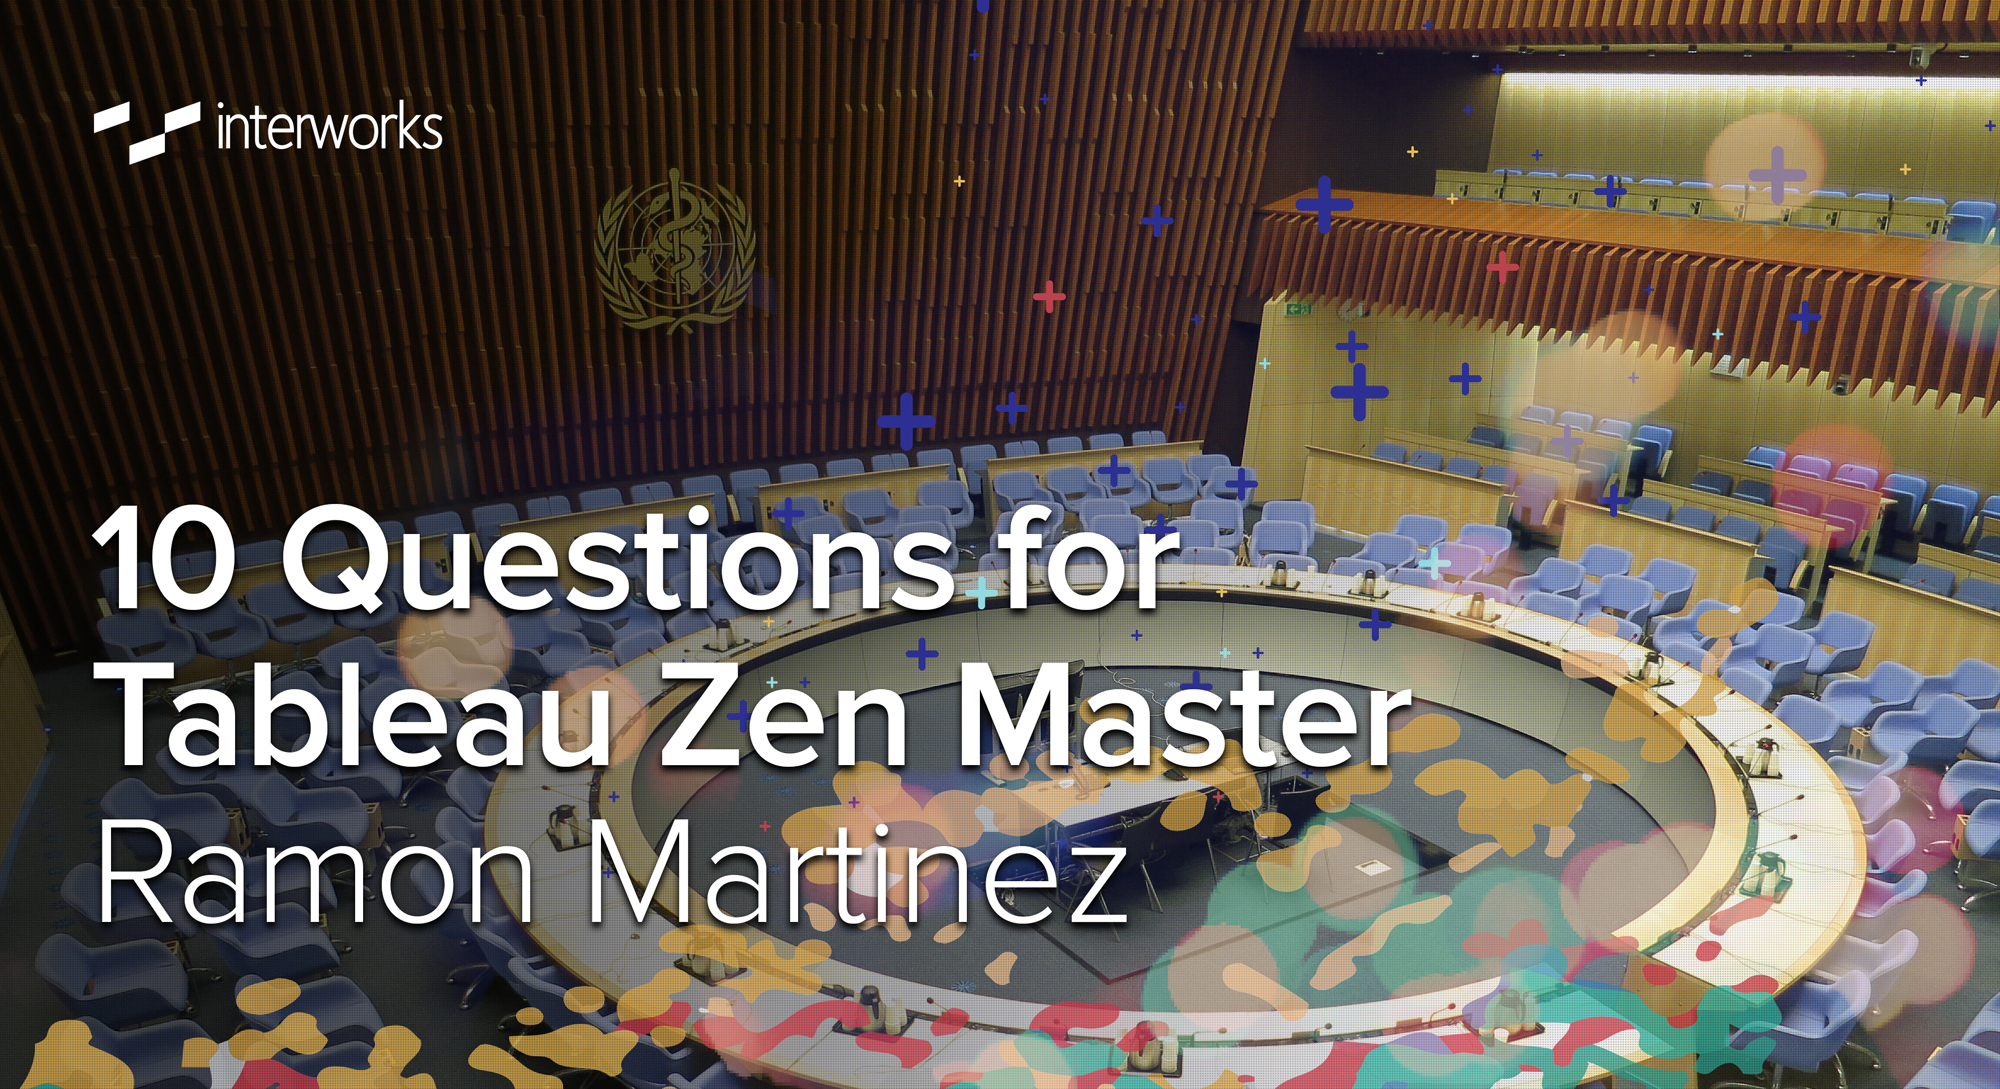 10 Questions for Tableau Zen Master Ramon Martinez